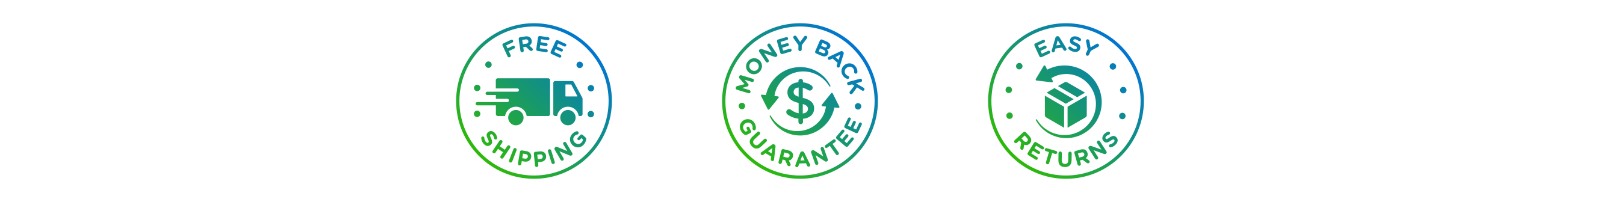 Free Shipping - Money Back Guarantee - Easy Returns